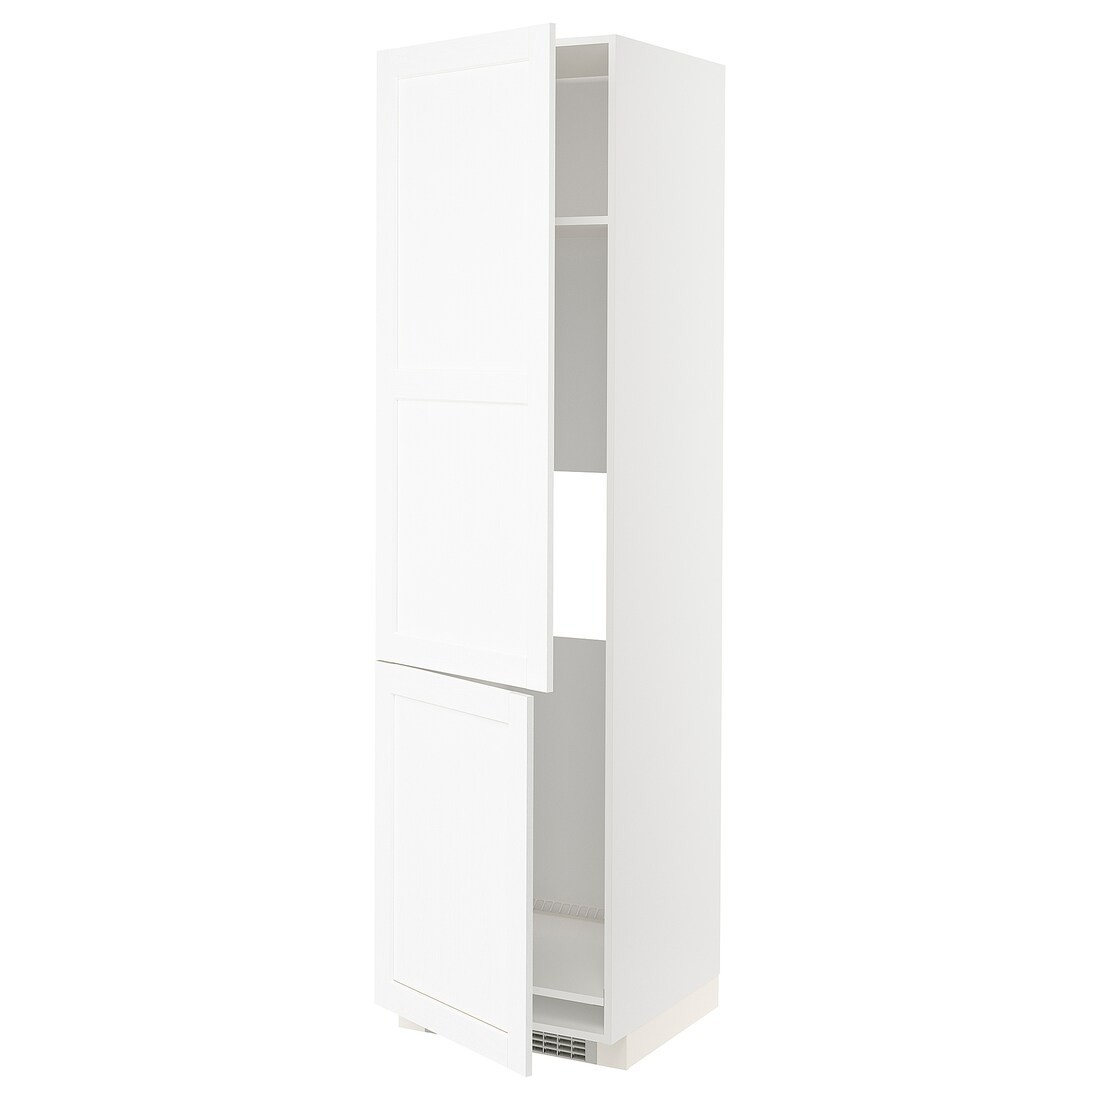 METOD МЕТОД Высокий шкаф для холодильника / морозильника / 2дверцы, белый Enköping / белый имитация дерева, 60x60x220 см